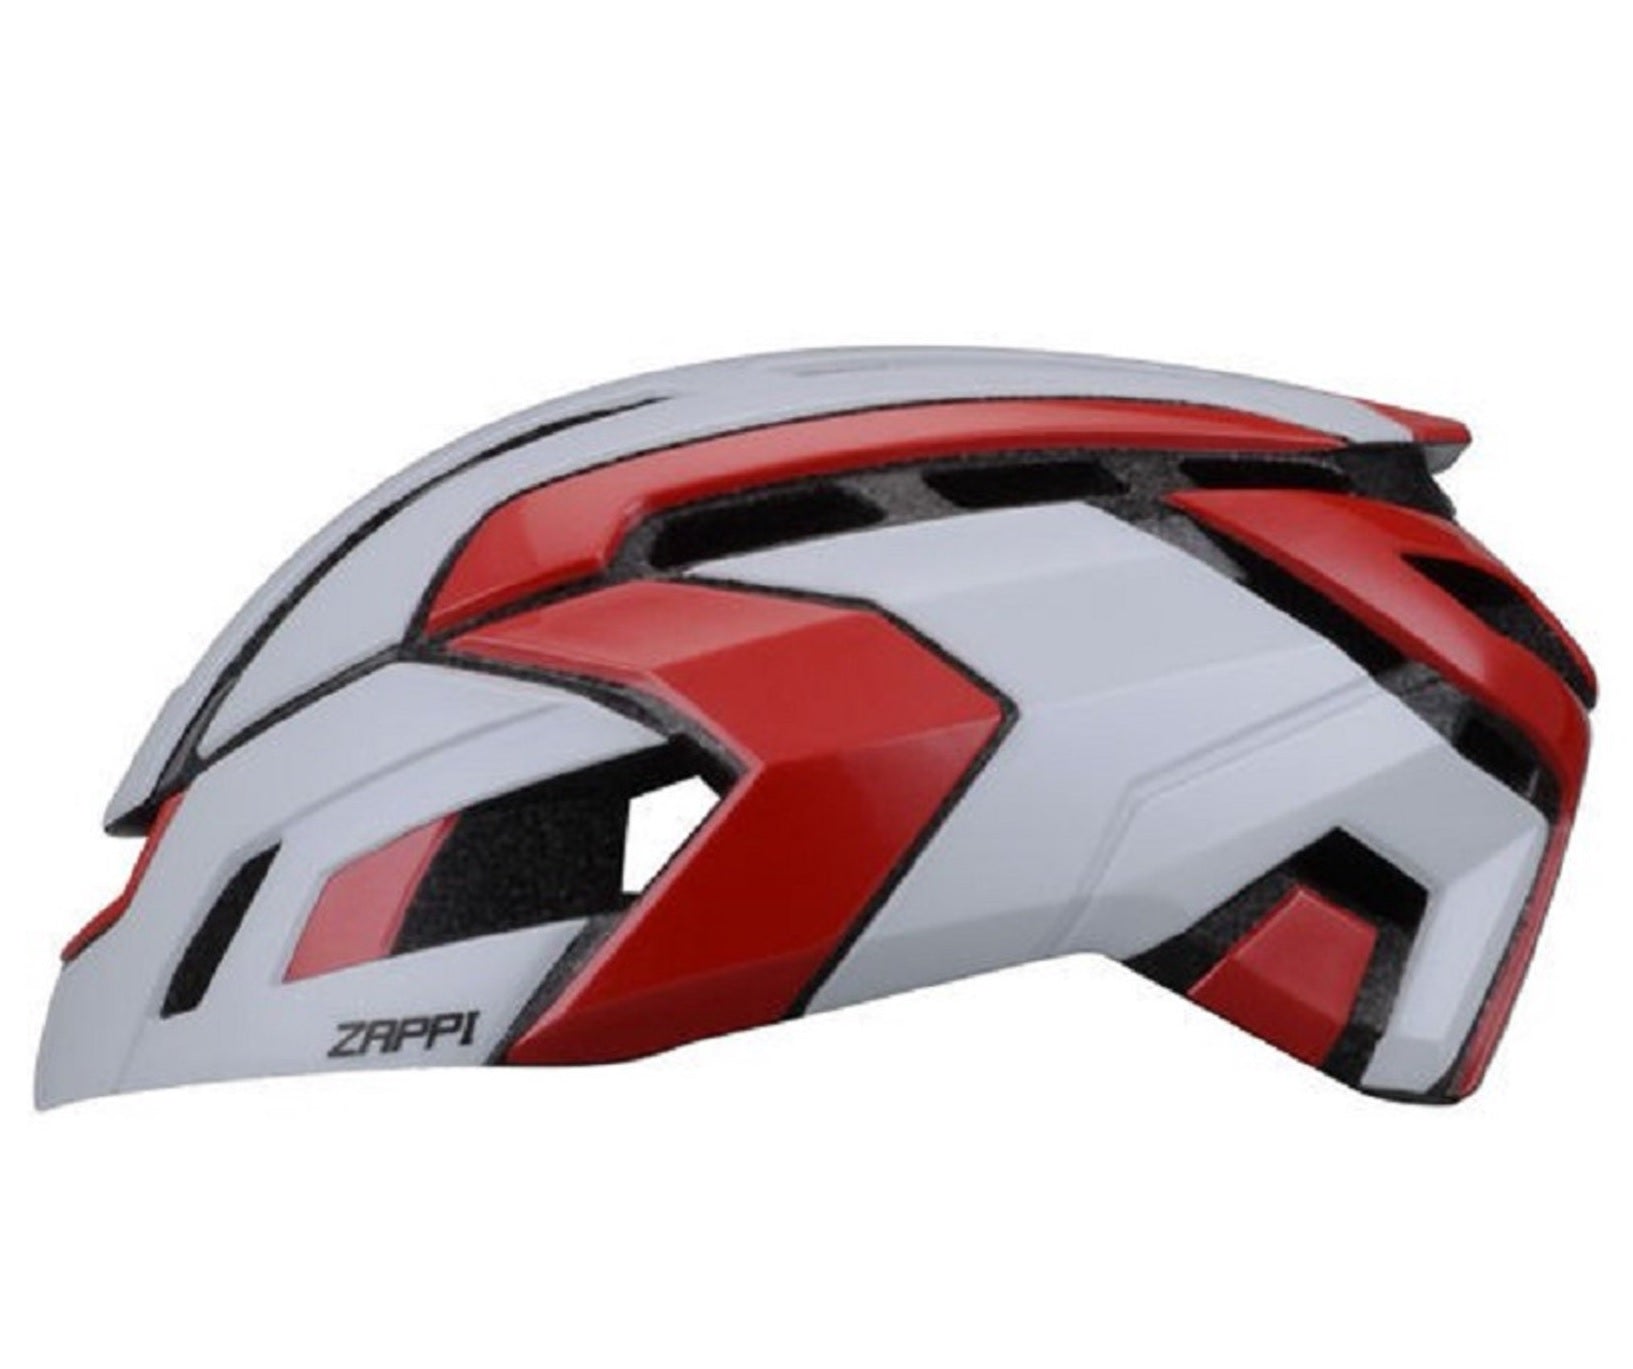 NOW ZAPPI Bike Cycling Helmet - Aerodynamic Bicycle White/Red S/M